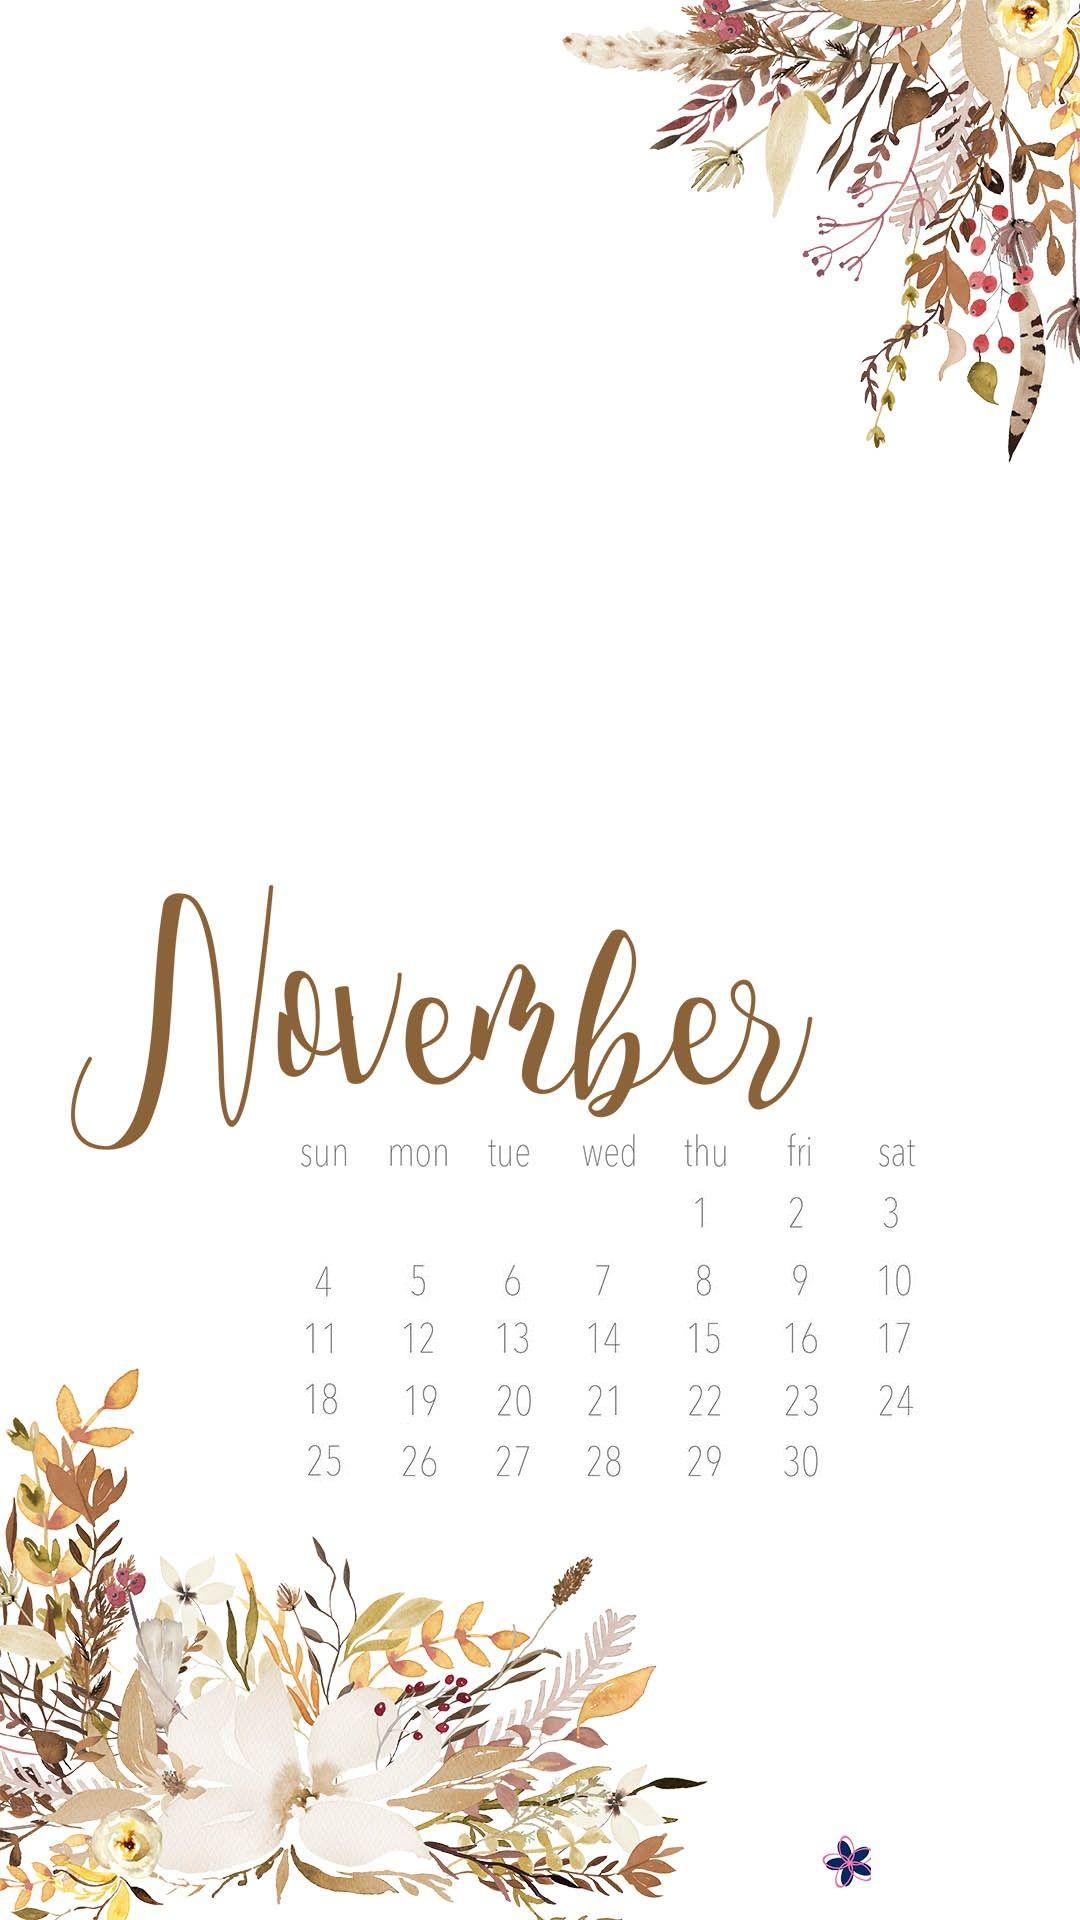 November 2018 iPhone Calendar Wallpaper